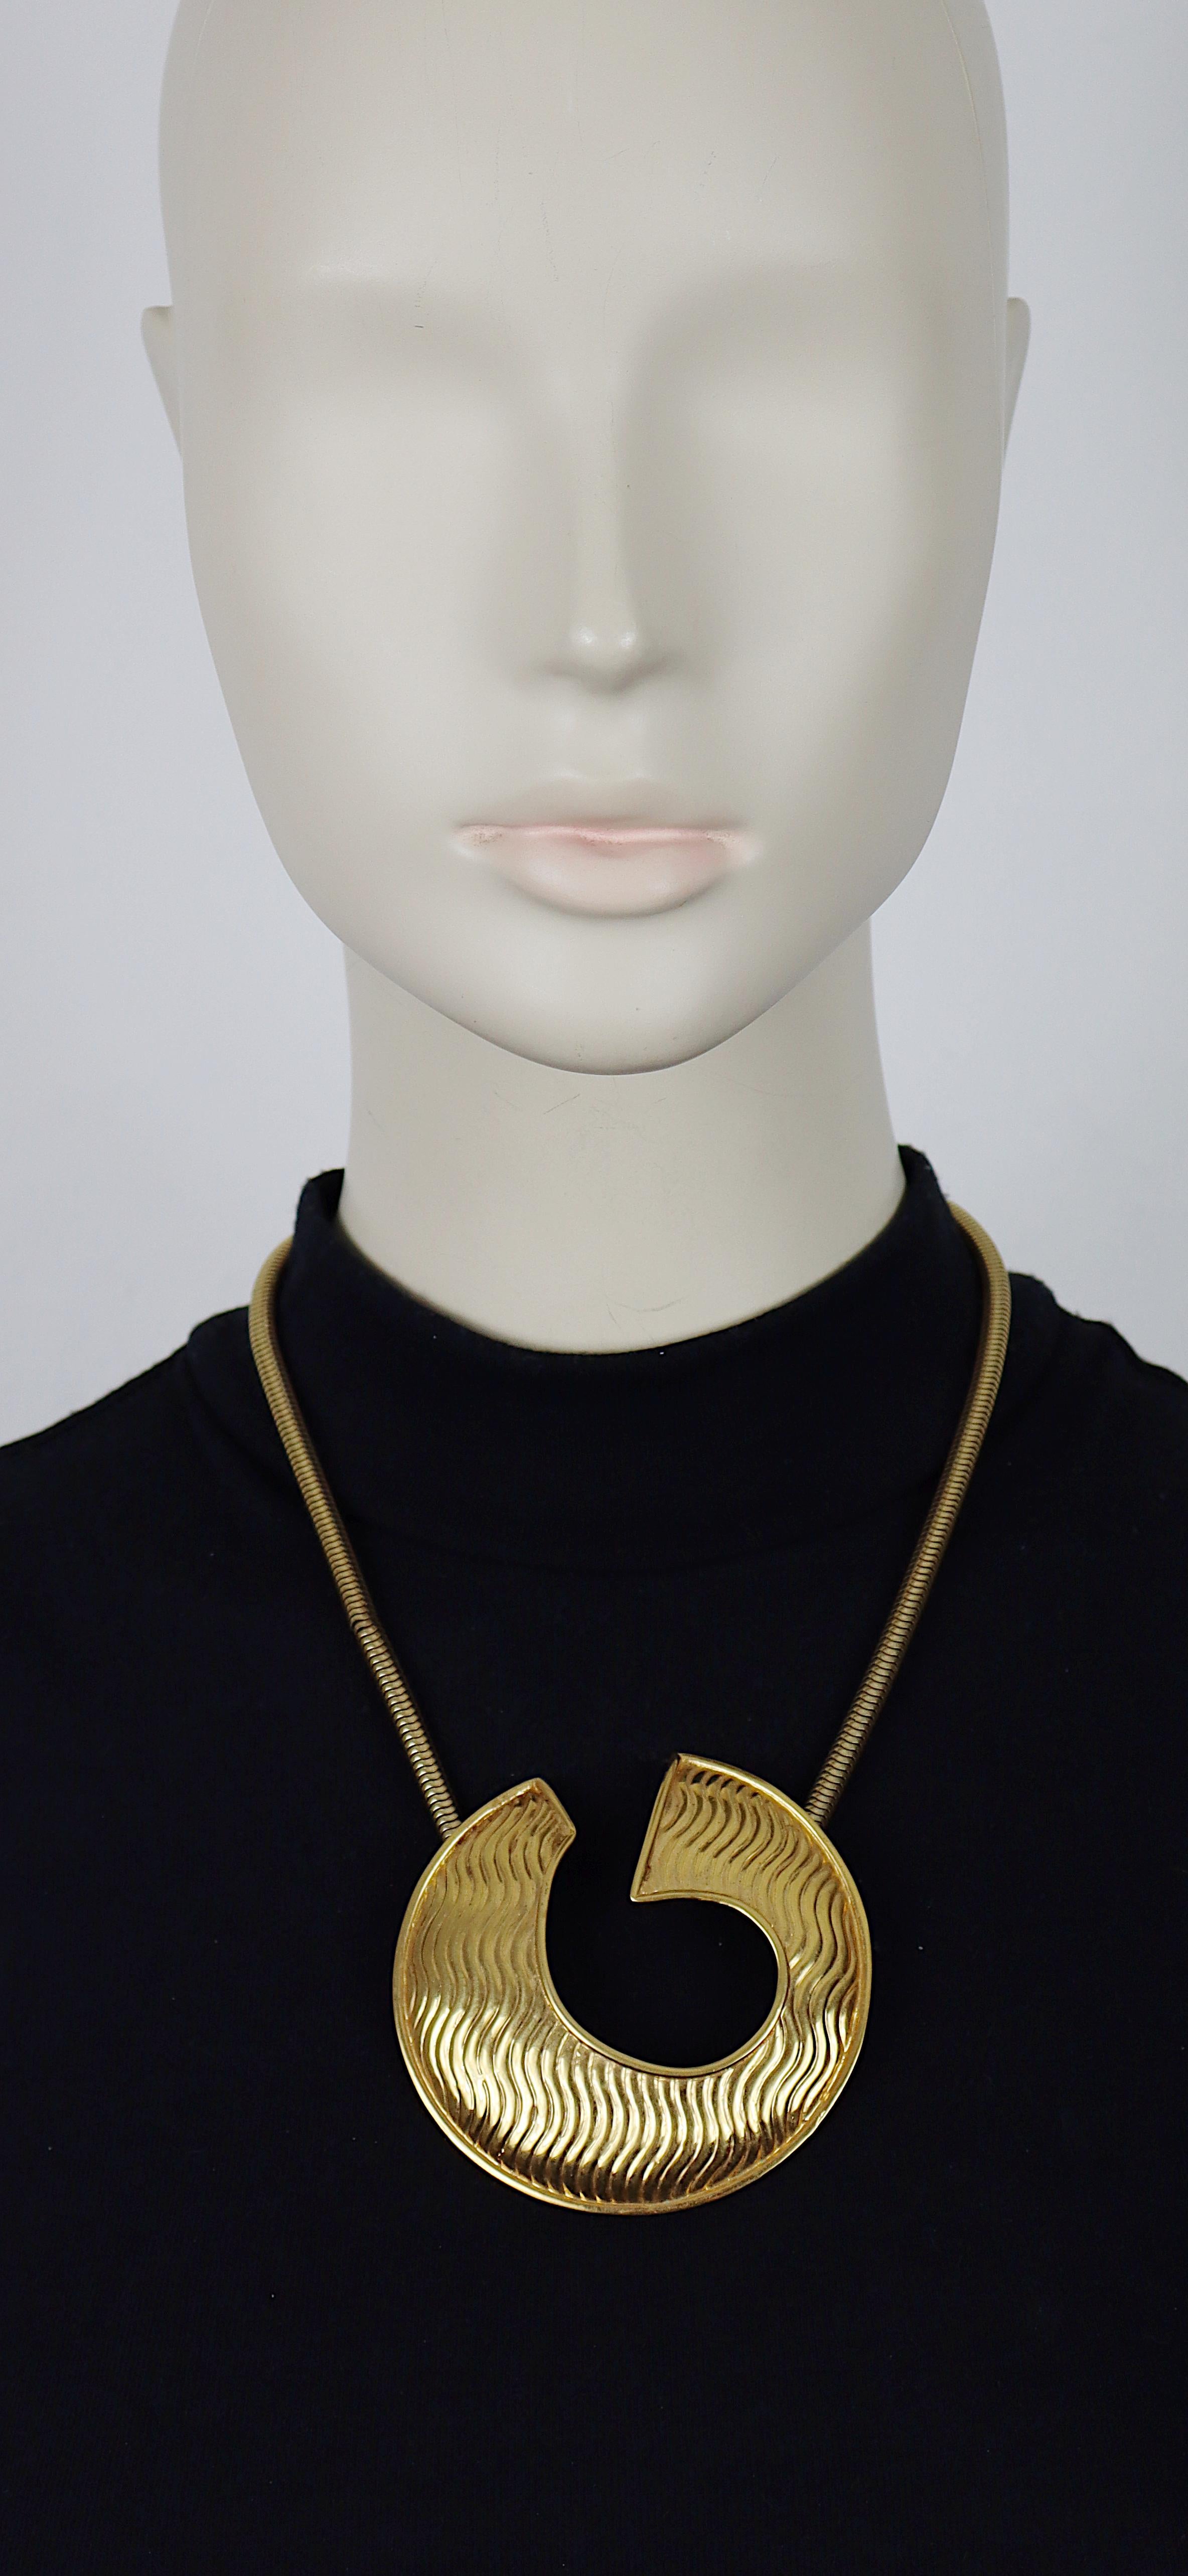 LANVIN vintage gold tone snake chain necklace featuring a large textured modernist pendant.

Spring clasp closure.

Embossed LANVIN PARIS.

Indicative measurements : length approx. 49 cm (19.29 inches) / pendant diameter approx. 7.6 cm (2.99